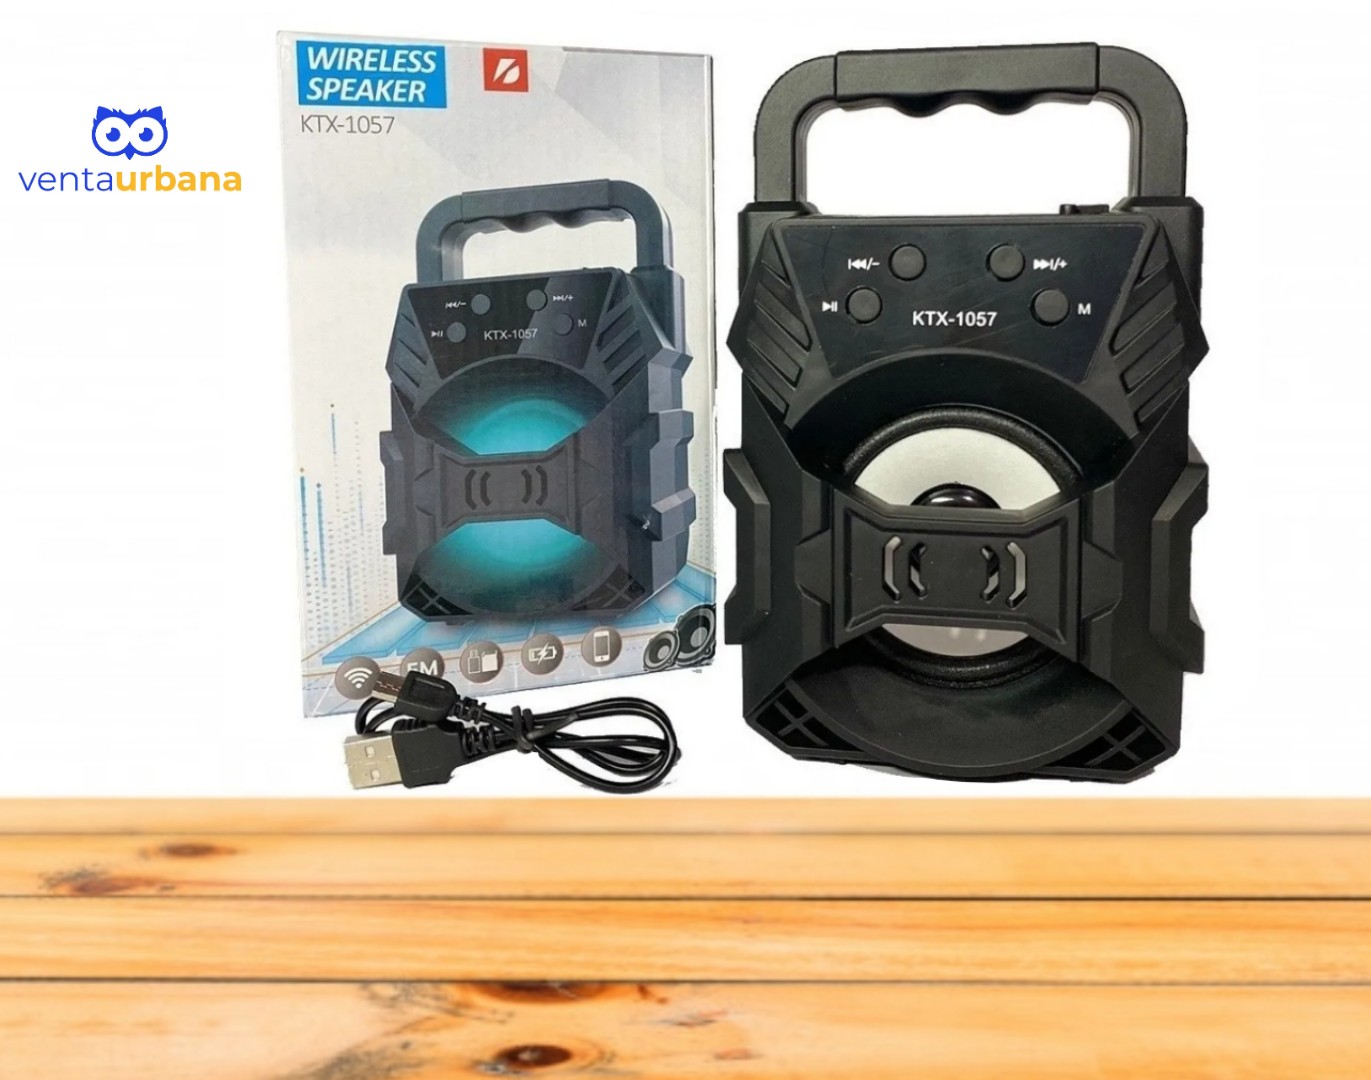 Siesta Noveno Yogur Super Mini bafle speaker de 3.5 pulgadas recargable usb memoria bluetooth y  FM : Venta Urbana